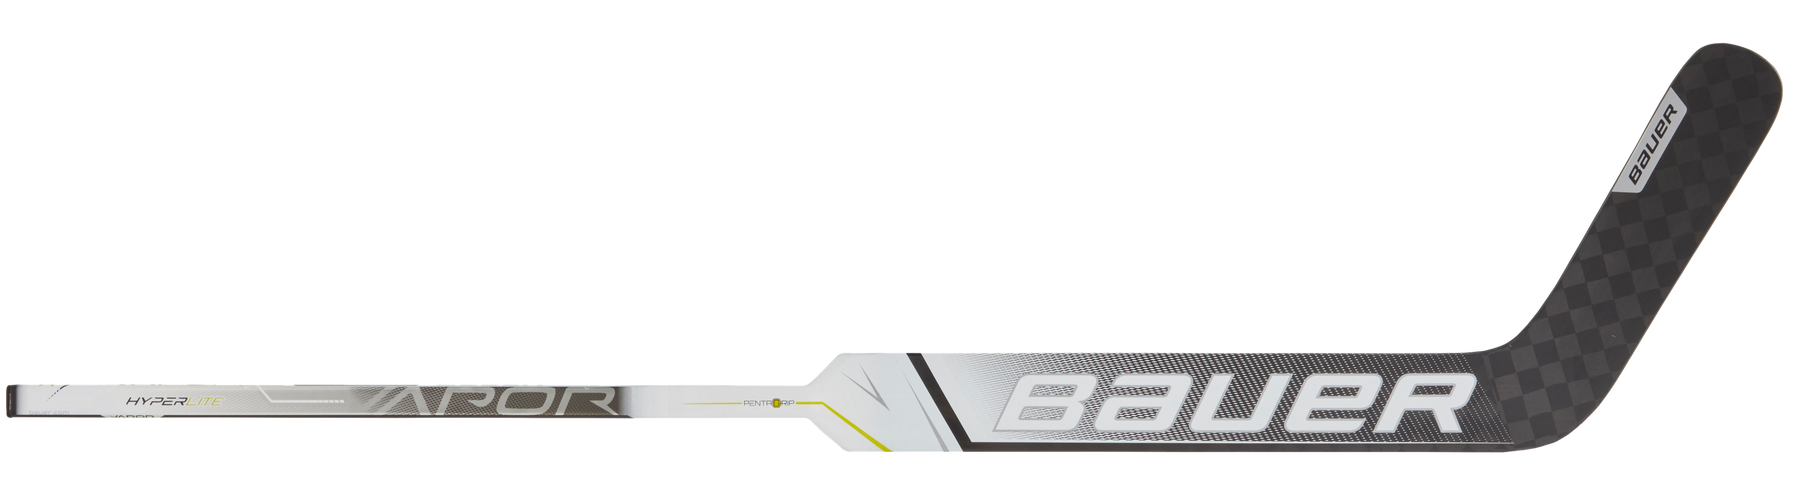 Bauer Vapor Hyperlite Intermediate Goalie Stick (White/Black)